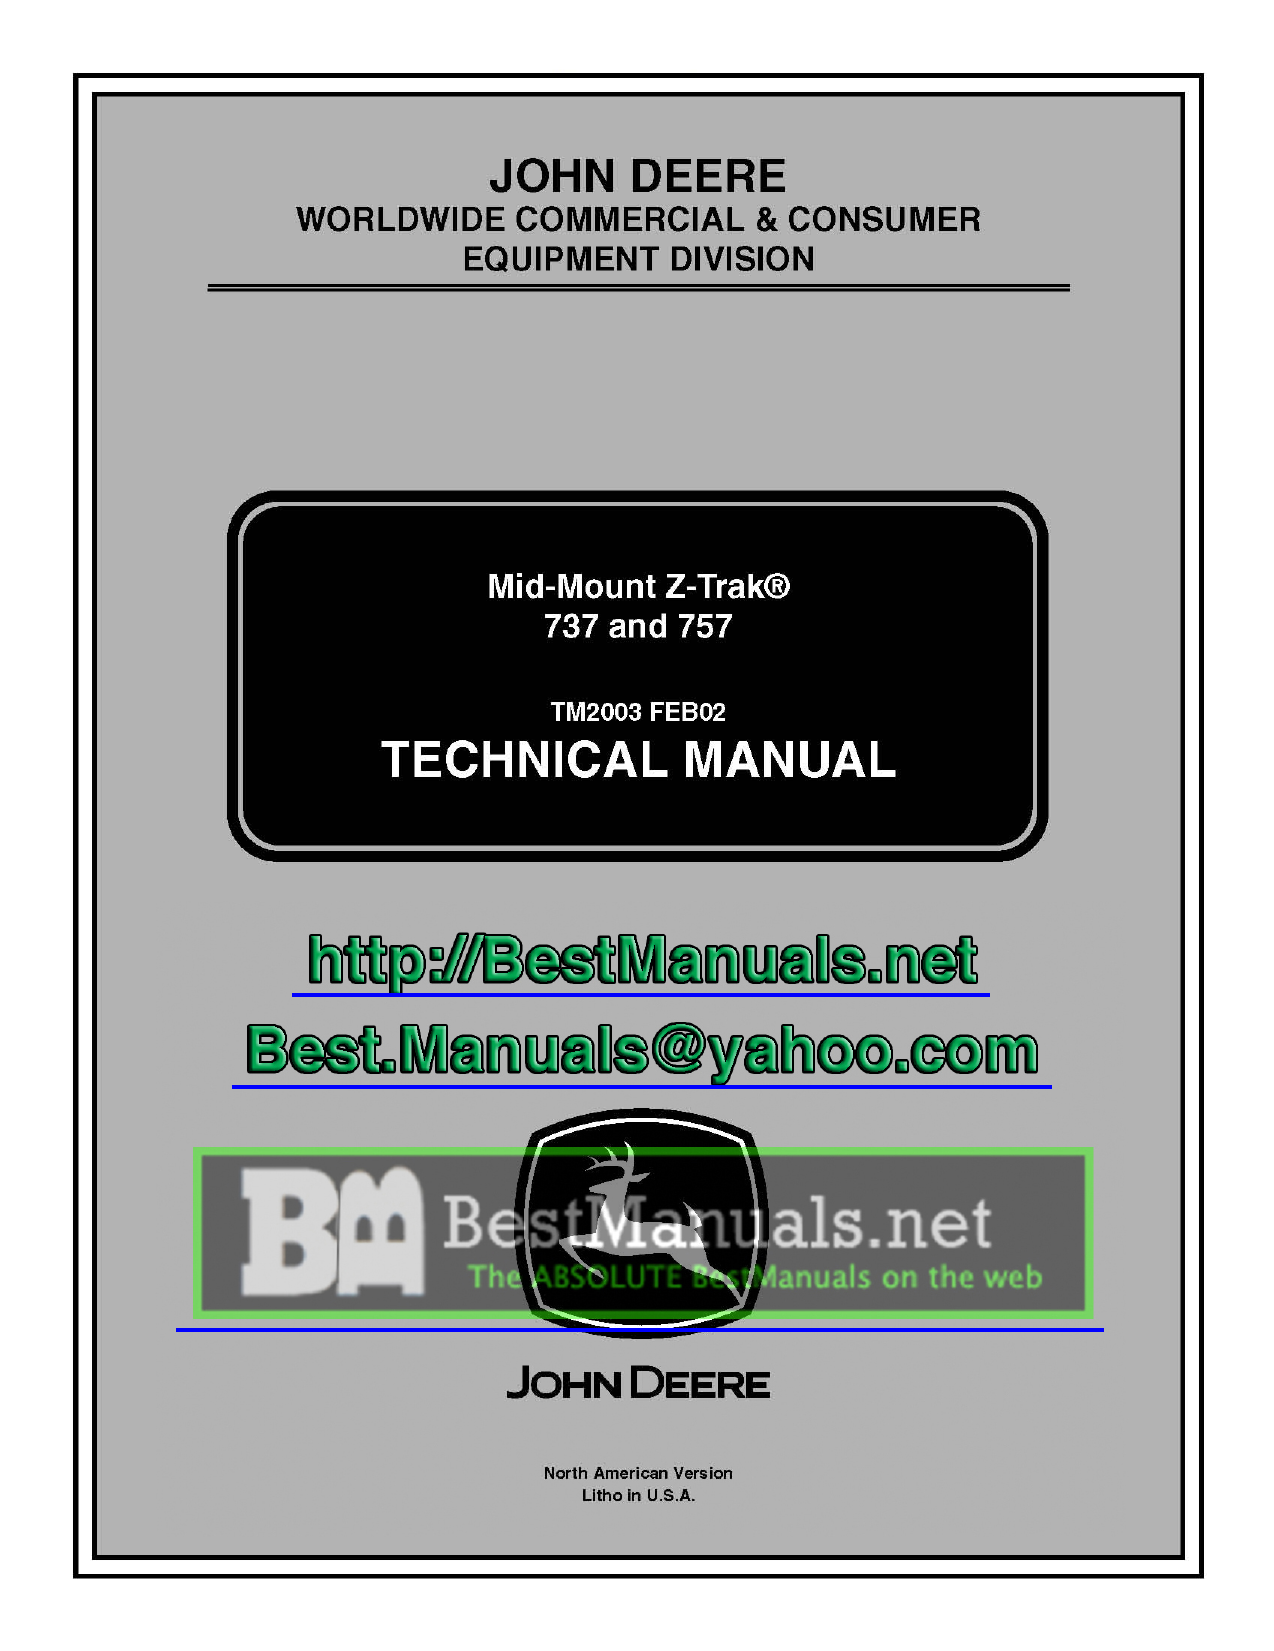 John Deere Mid-Mount Z-Trak 737-757 zero-turn mower technical manual Preview image 1